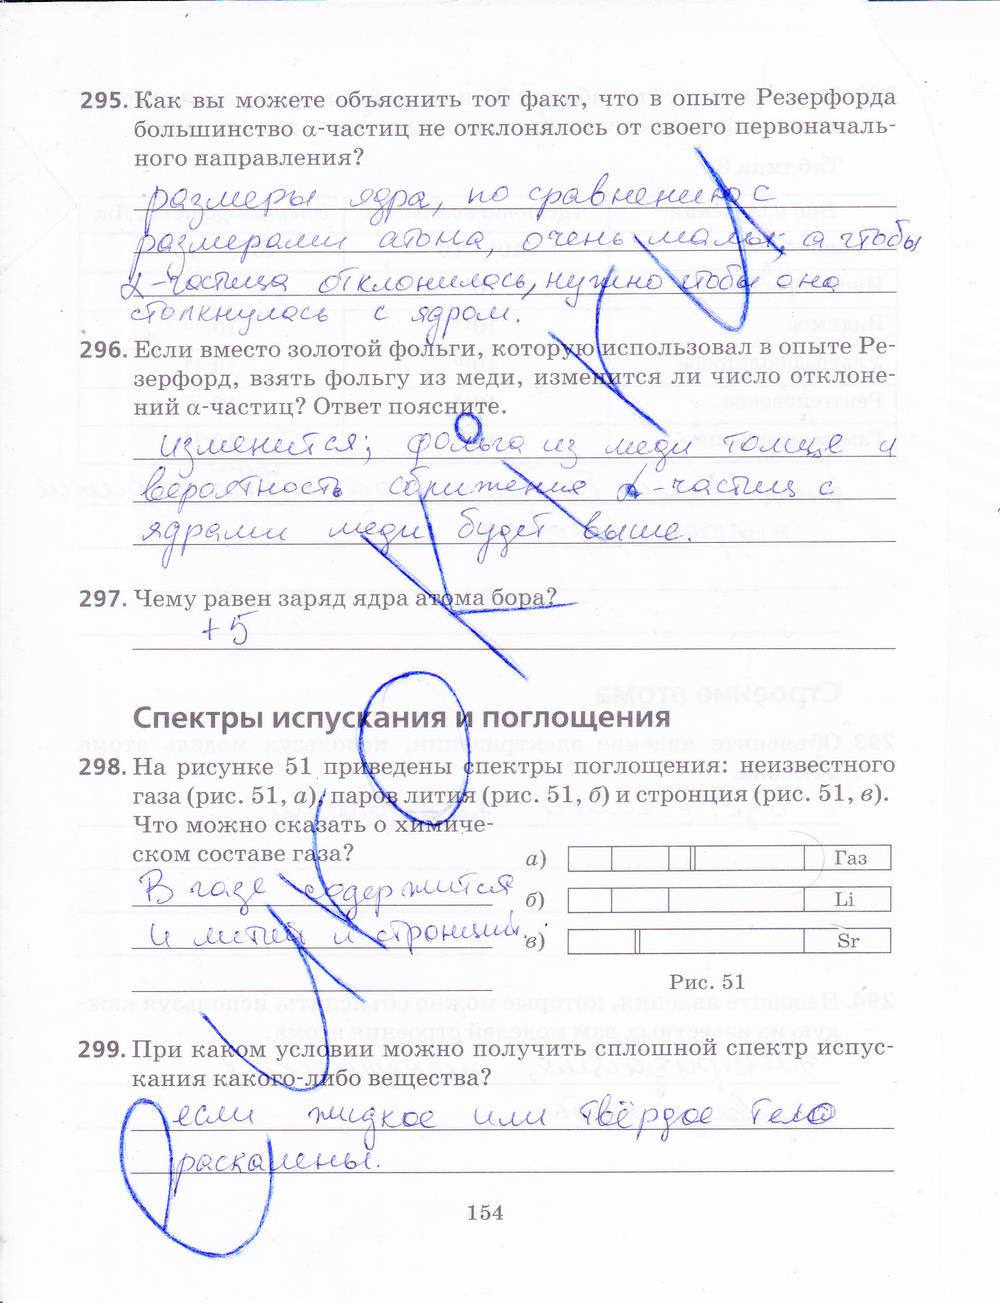 гдз 9 класс рабочая тетрадь страница 154 физика Пурышева, Важеевская, Чаругин